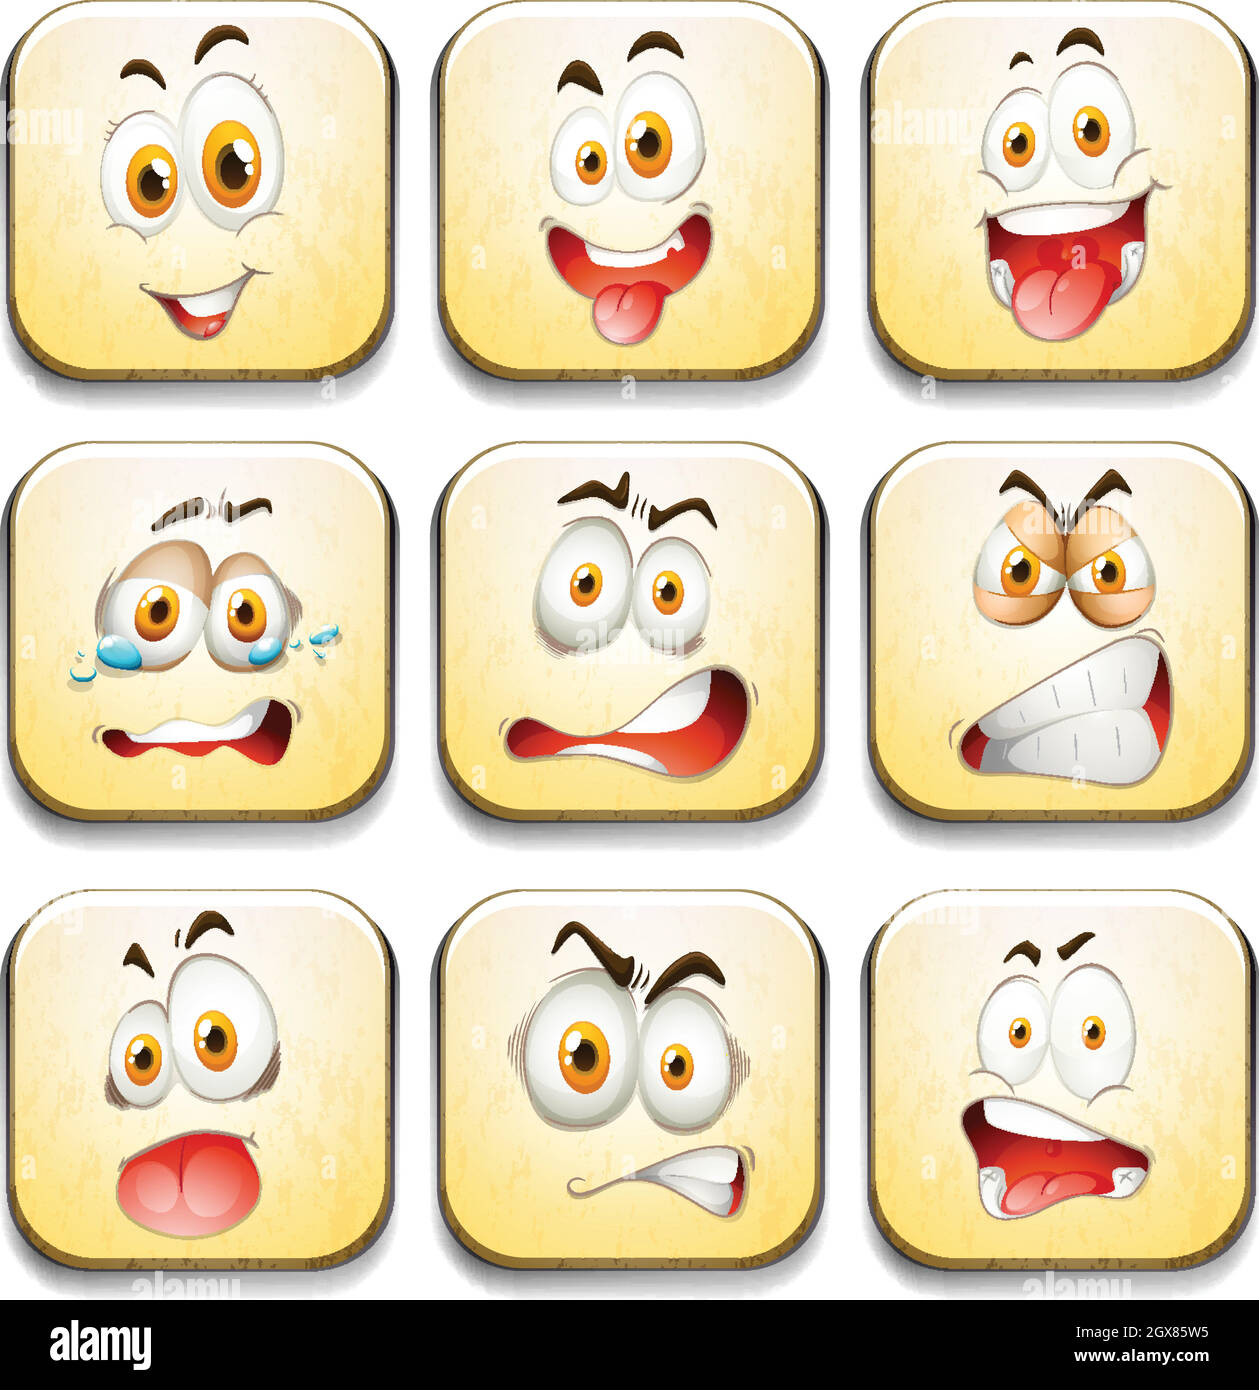 Facial expressions on yellow tiles Stock Vector